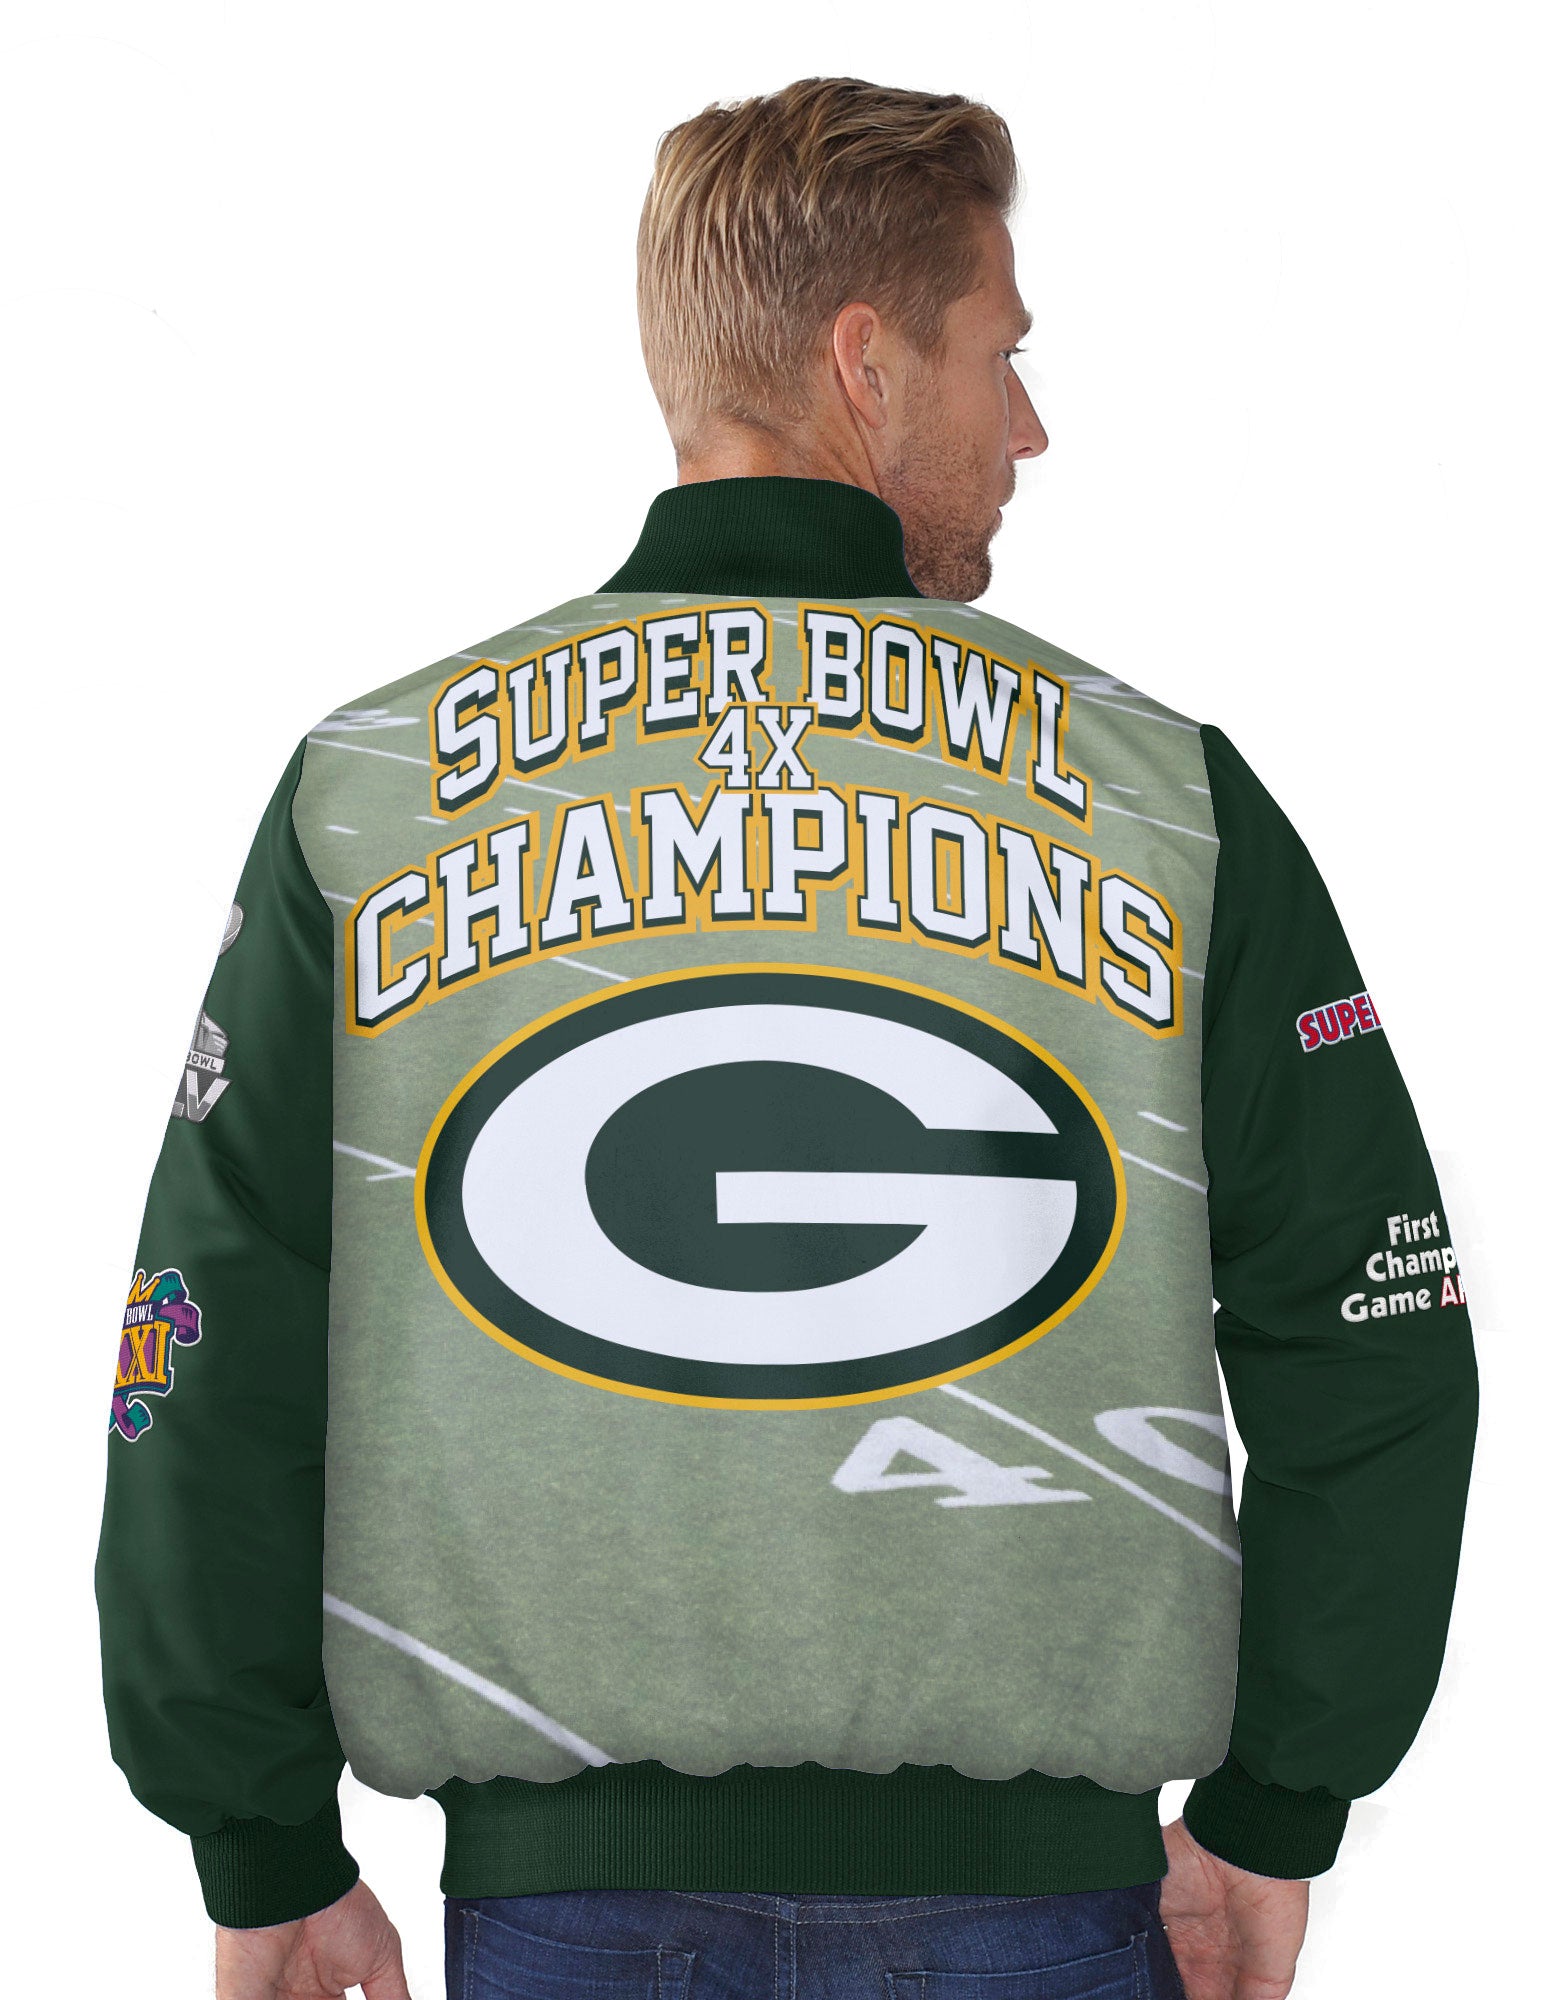 G-III Men's Green Bay Packers Varsity Jacket